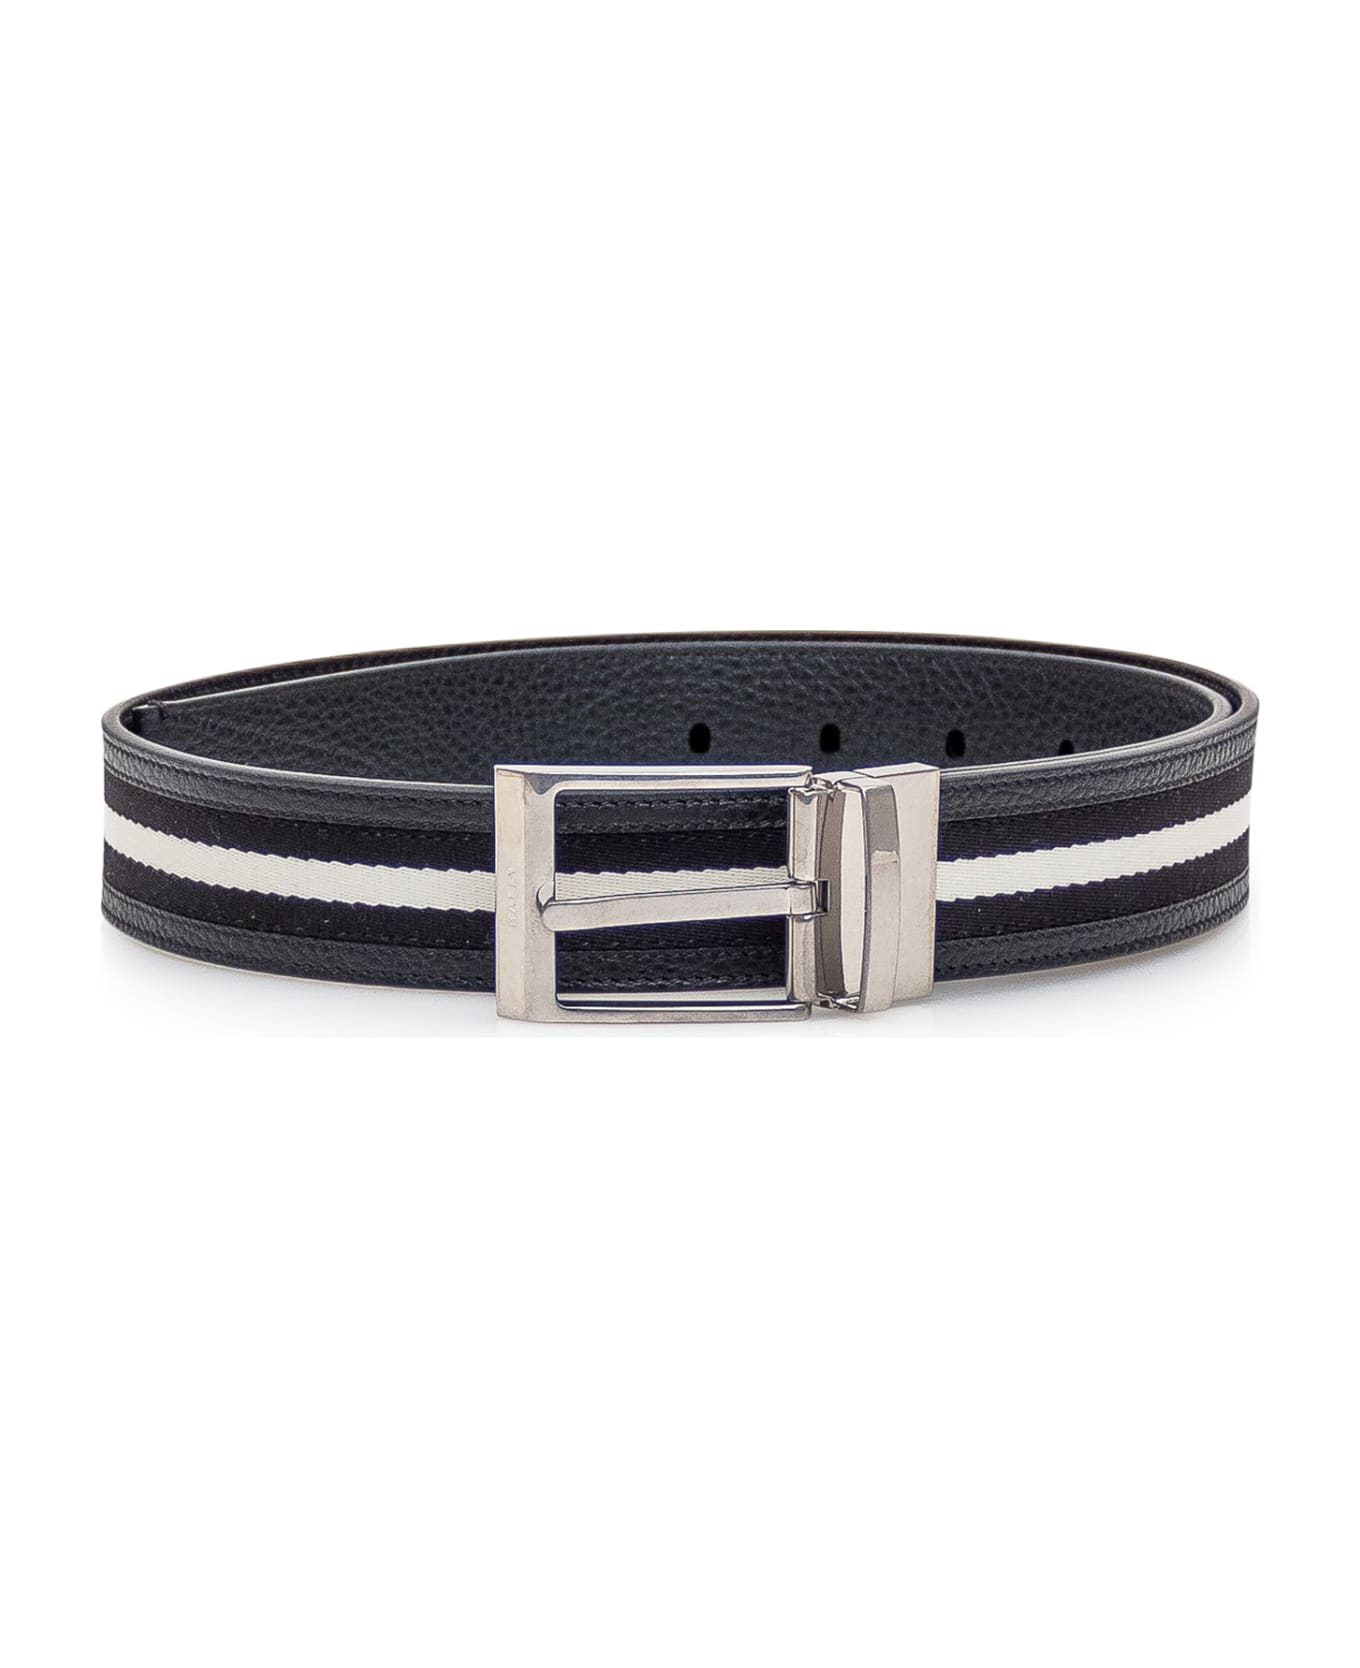 Bally Leather Belt - BLACK+BLK/BONE+PALL